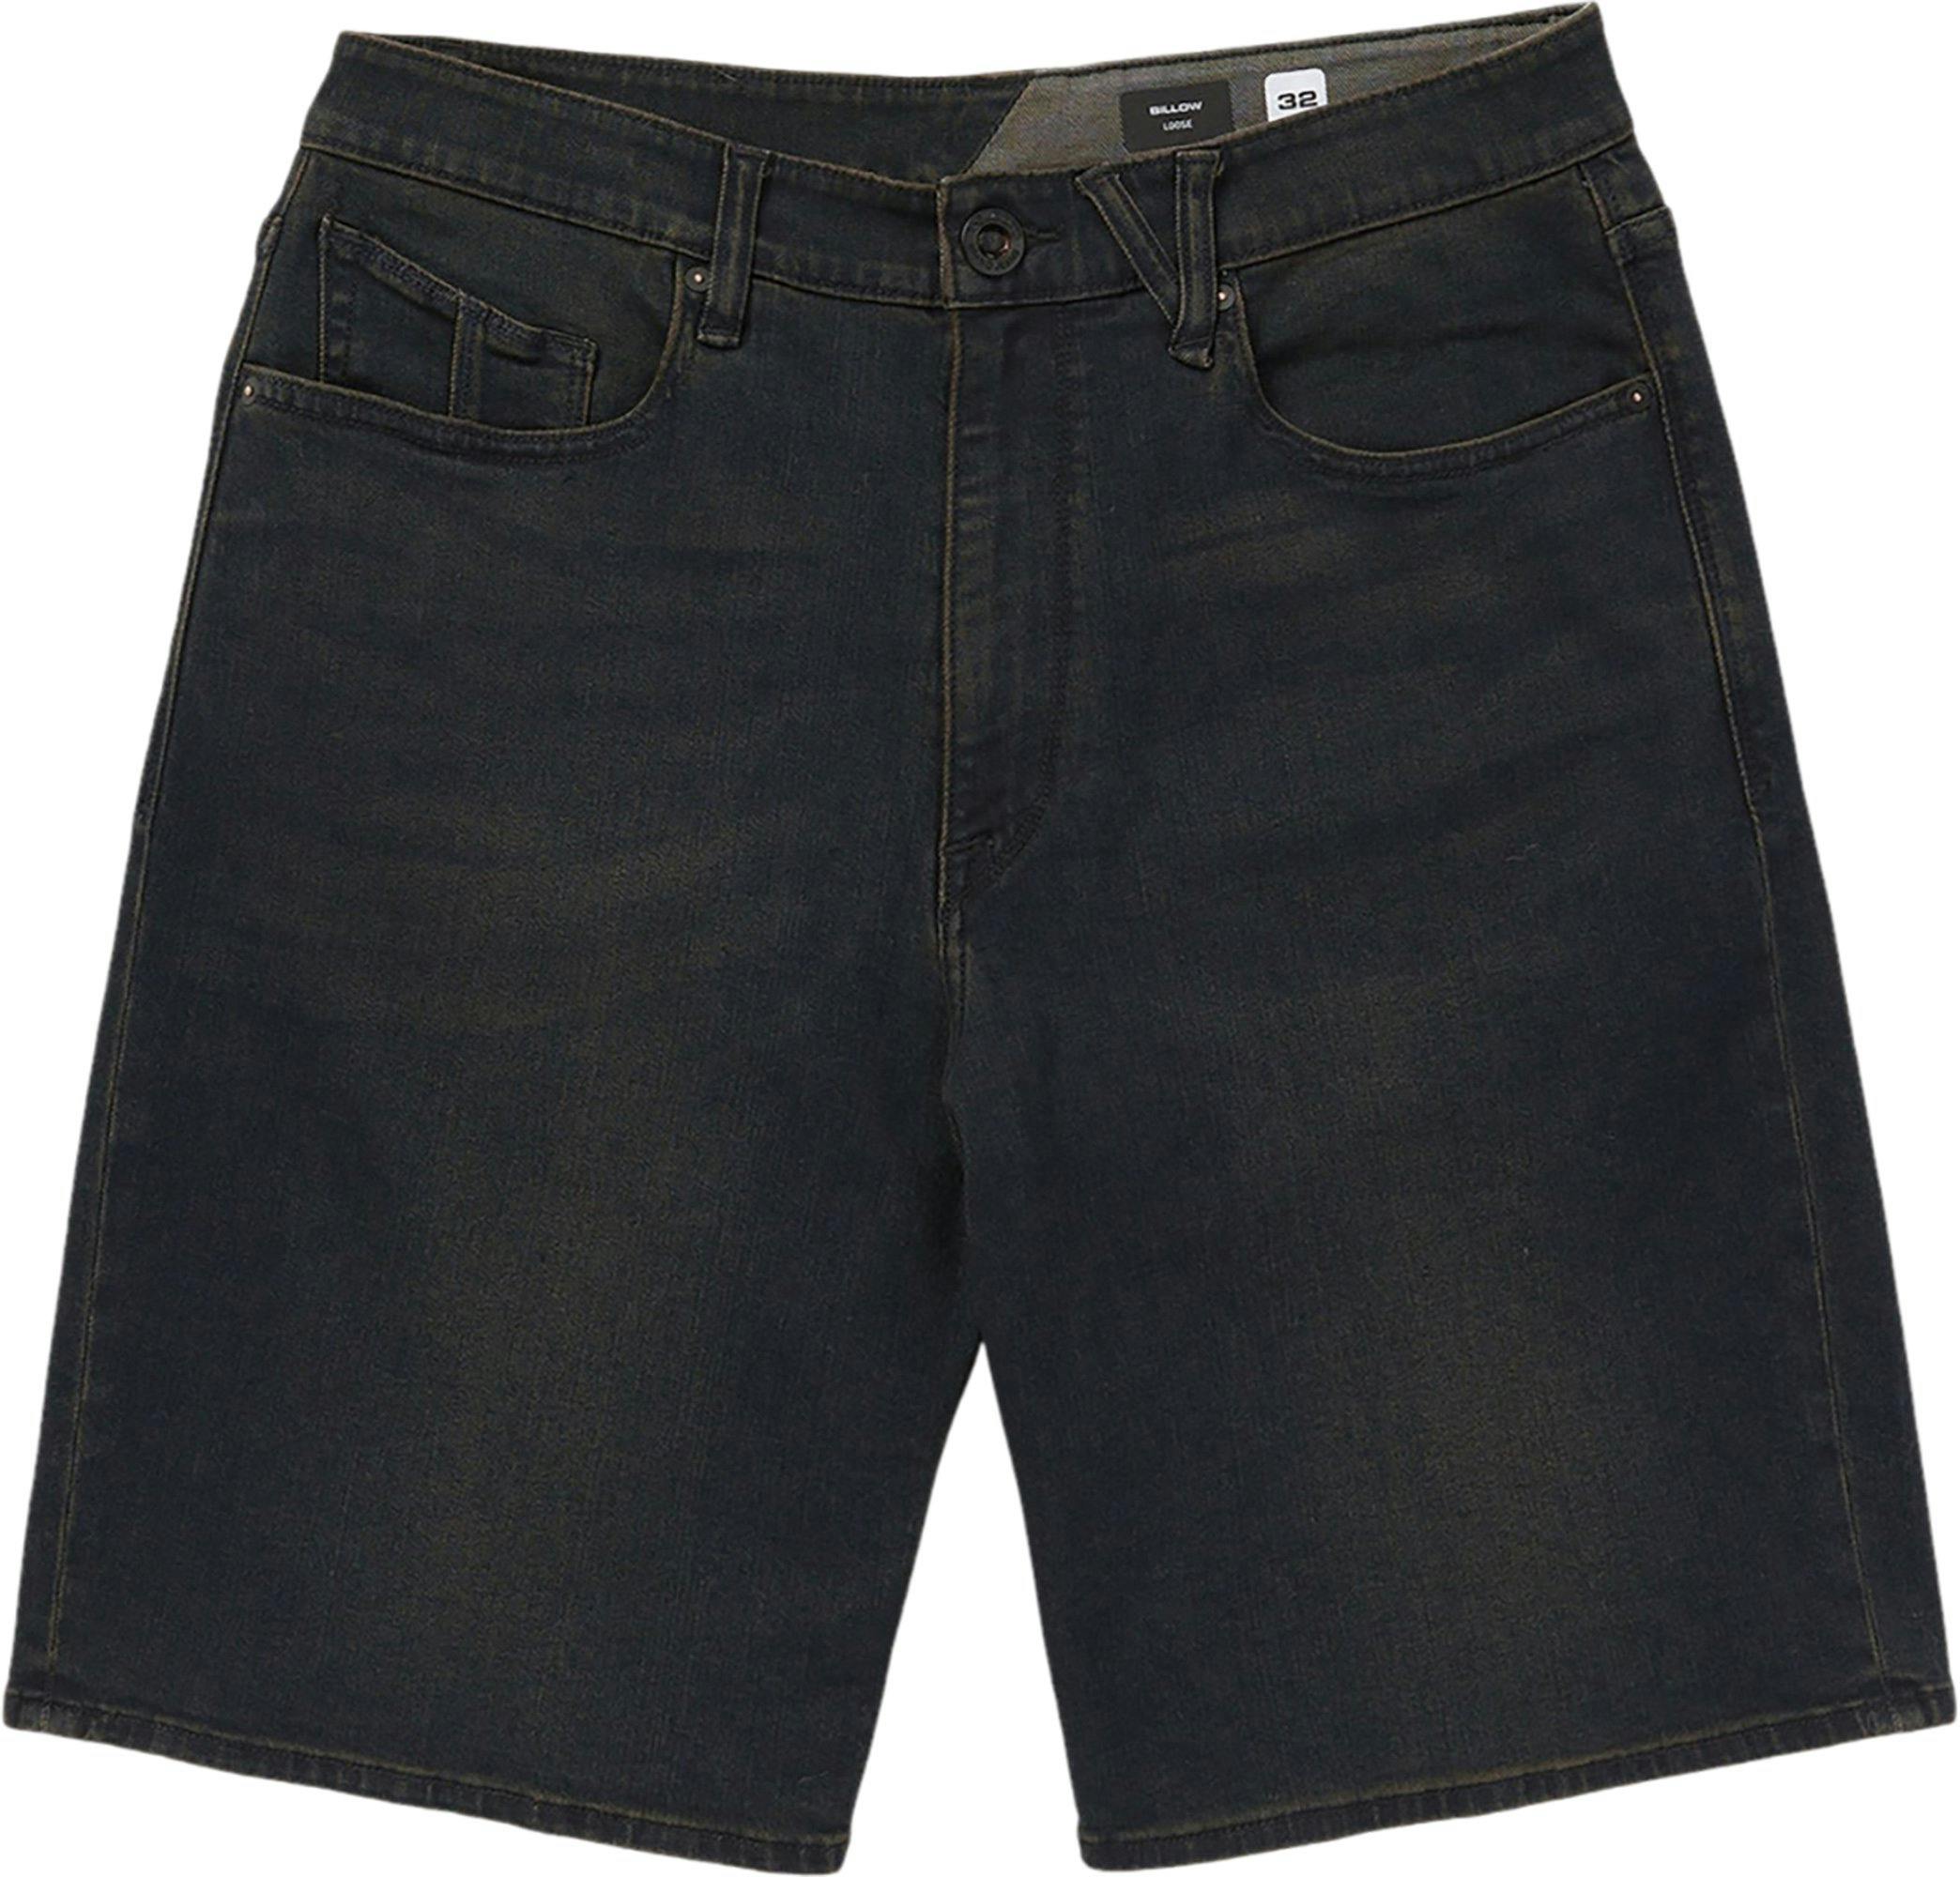 Product image for Billow Denim Shorts - Men's